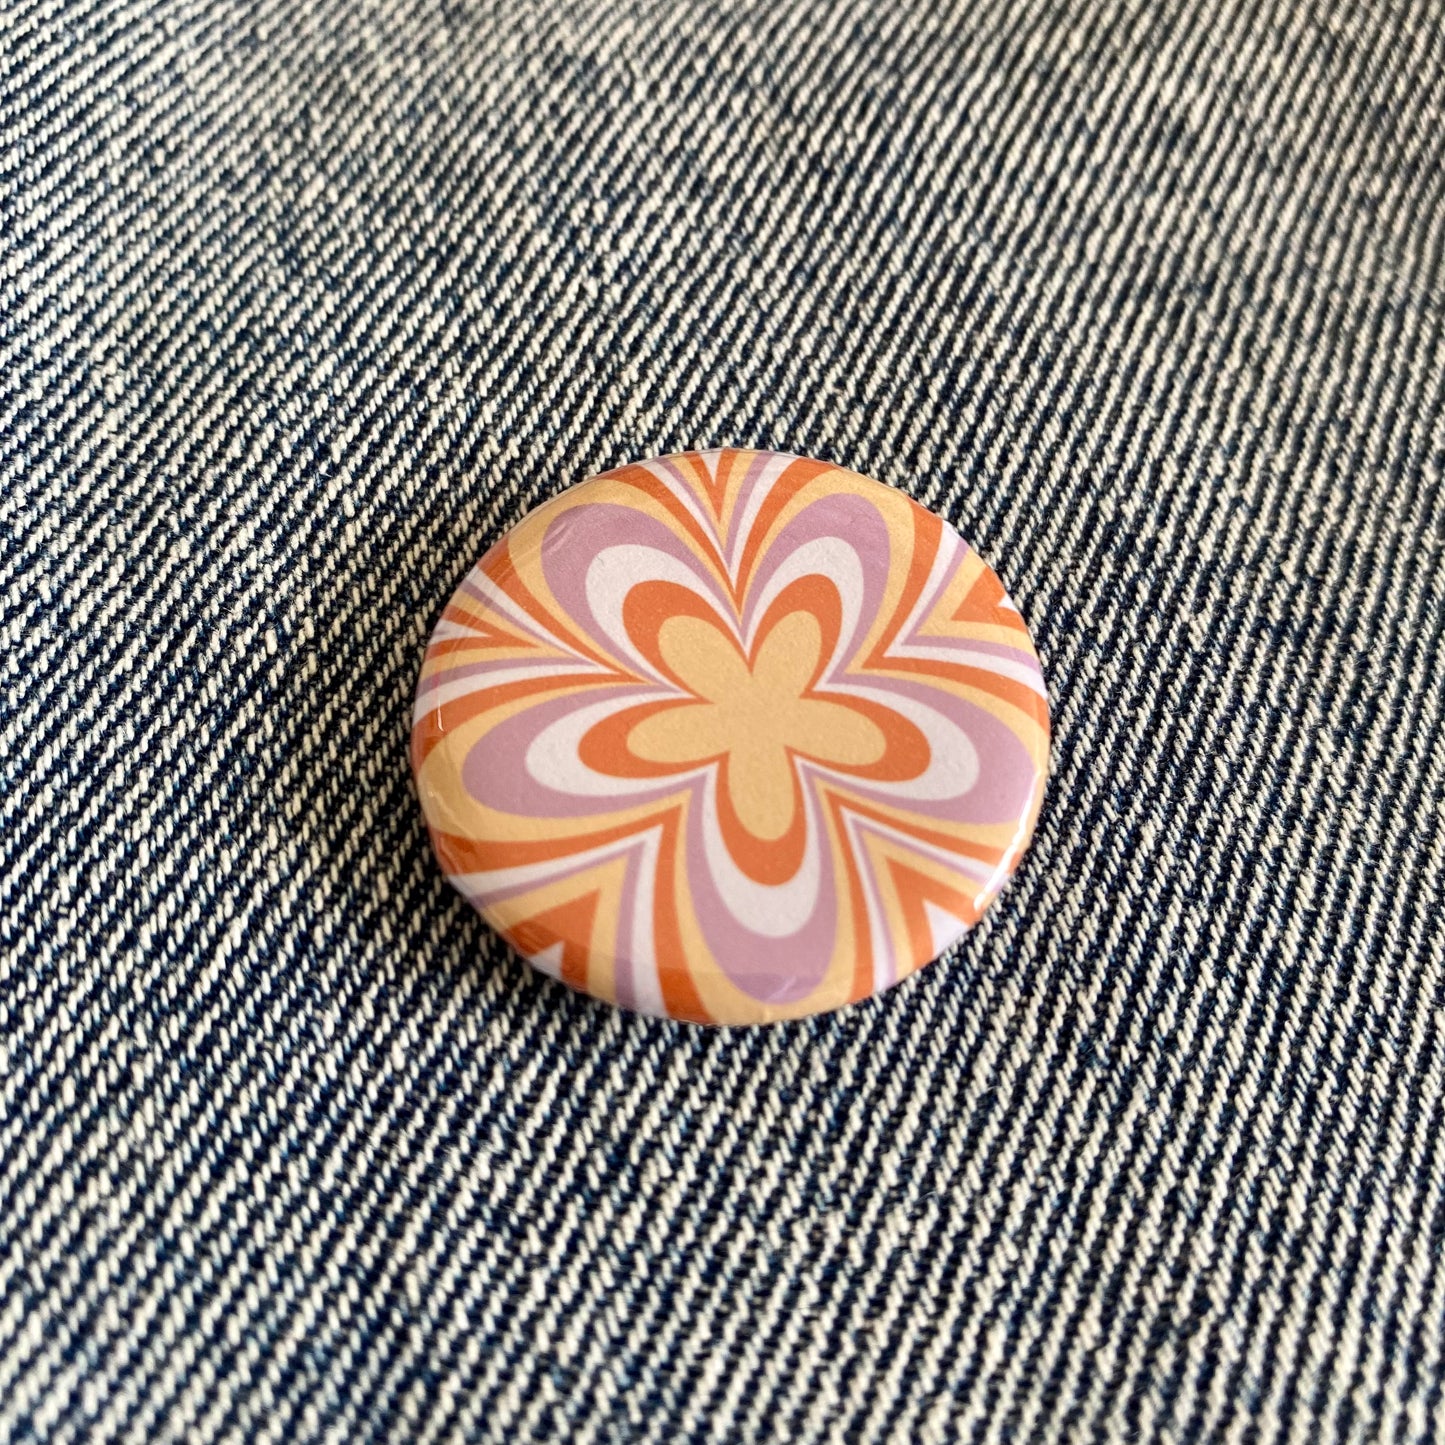 Retro Flower | Pin Badge Button